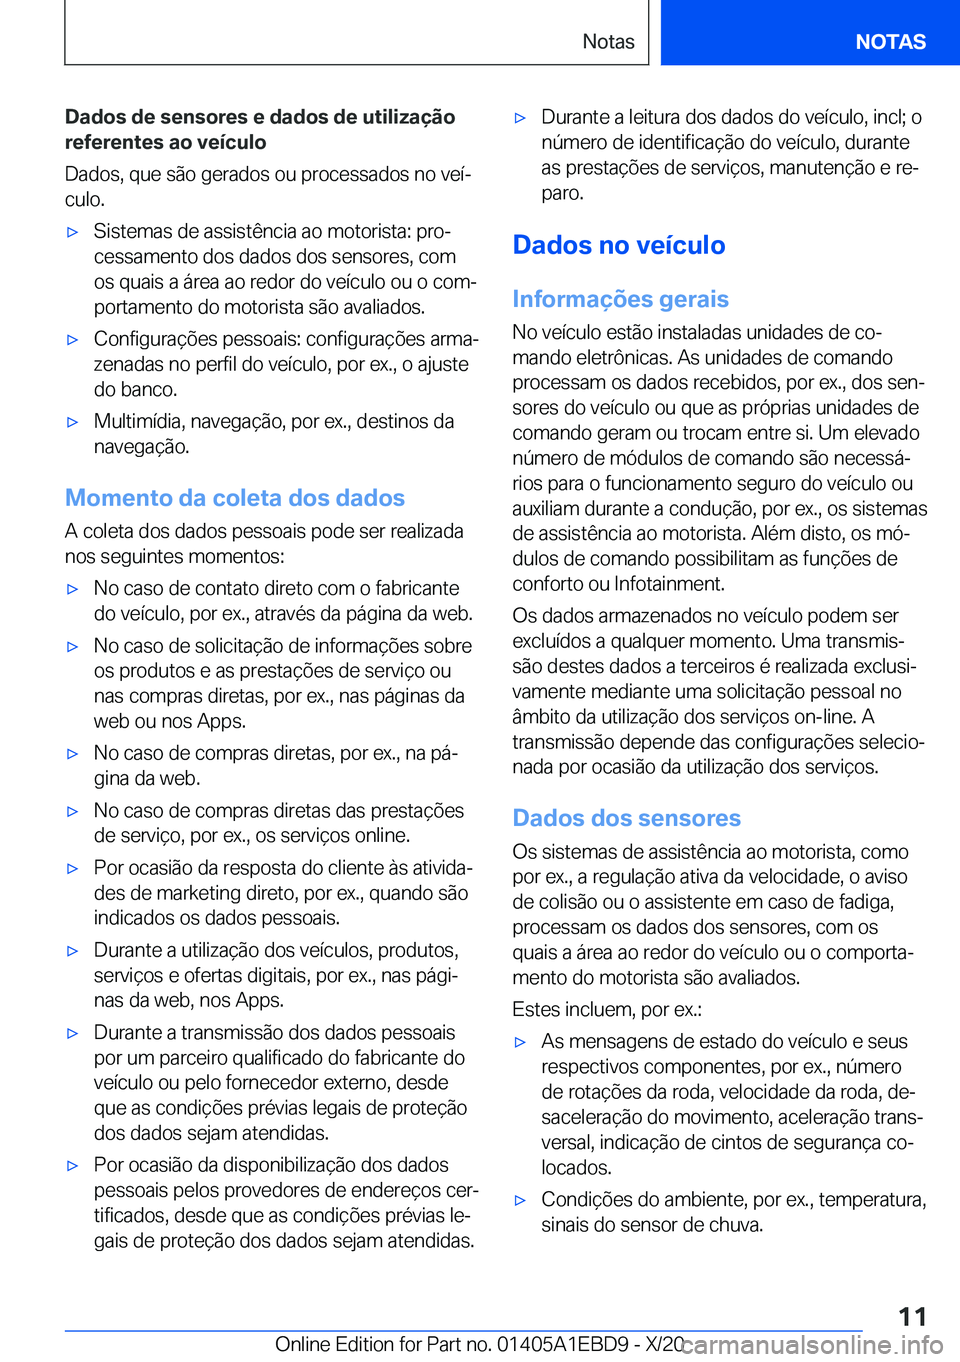 BMW 3 SERIES 2021  Manual do condutor (in Portuguese) �D�a�d�o�s��d�e��s�e�n�s�o�r�e�s��e��d�a�d�o�s��d�e��u�t�i�l�i�z�a�